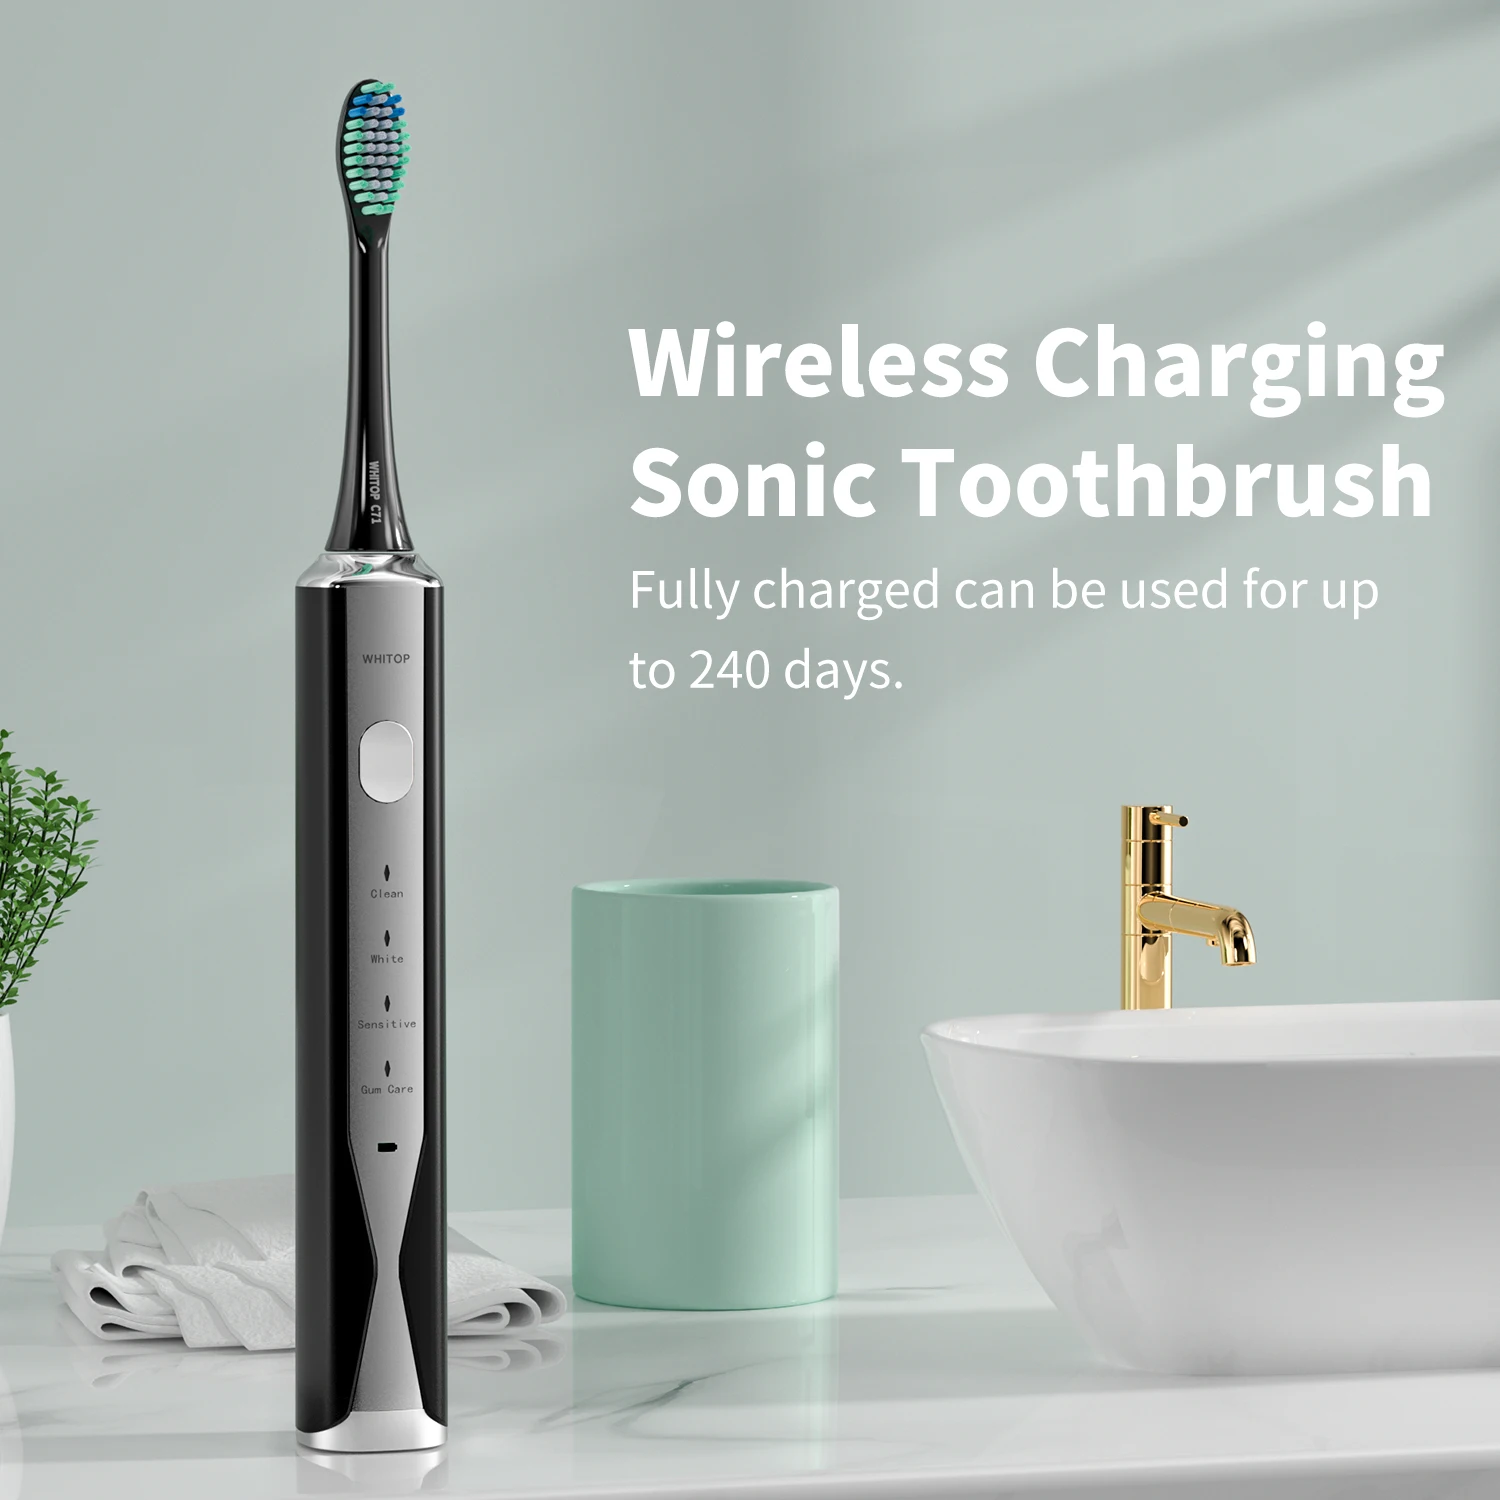 WHITOP 歯ブラシ携帯用ケース 歯ブラシ トラベル ケース 電動歯ブラシ収納ケース グリーン